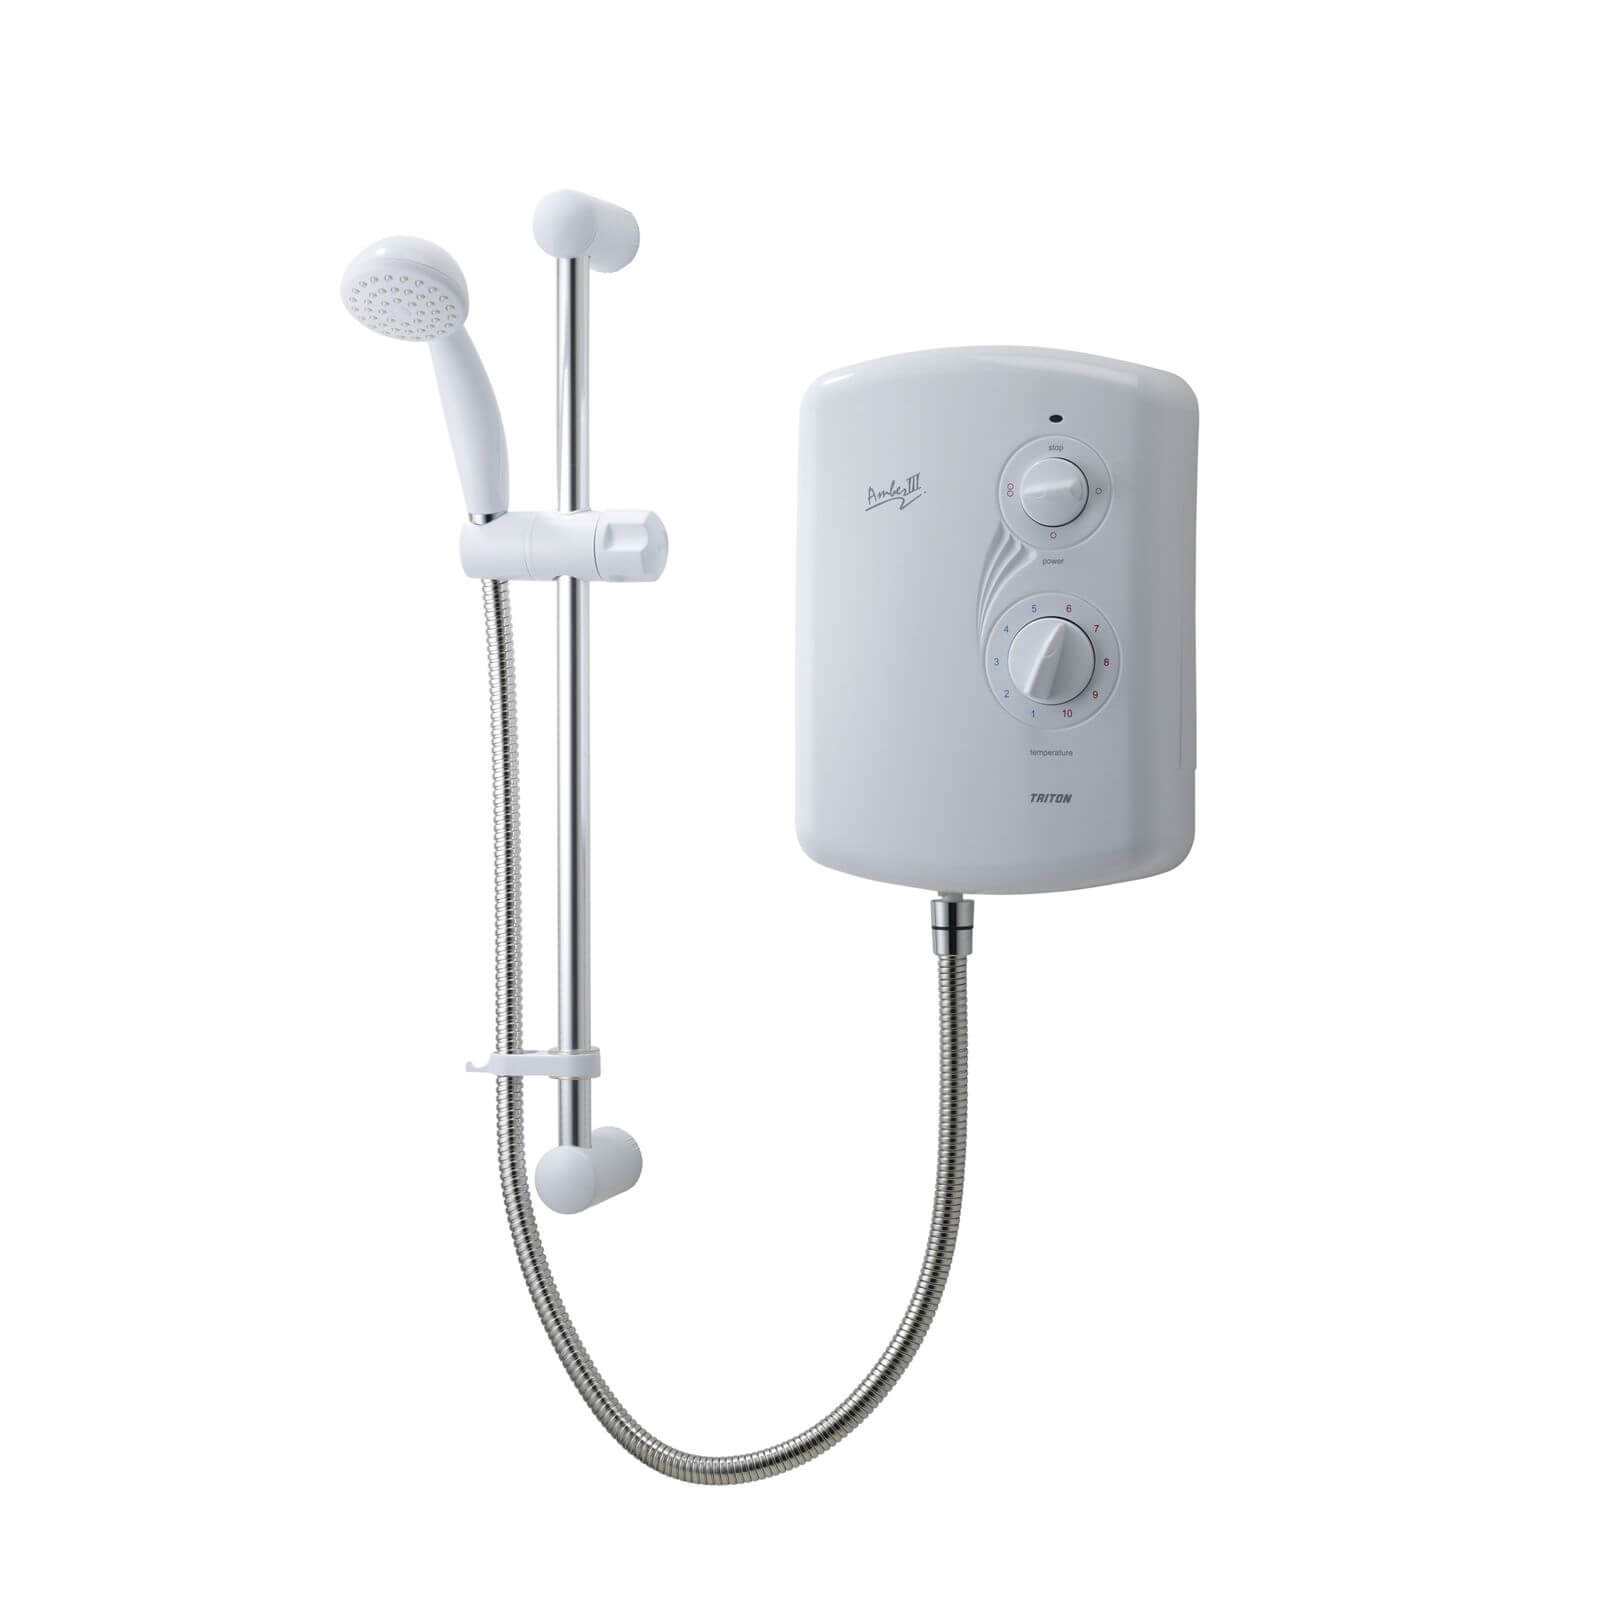 Triton Amber 3 10.5kW Electric Shower - White